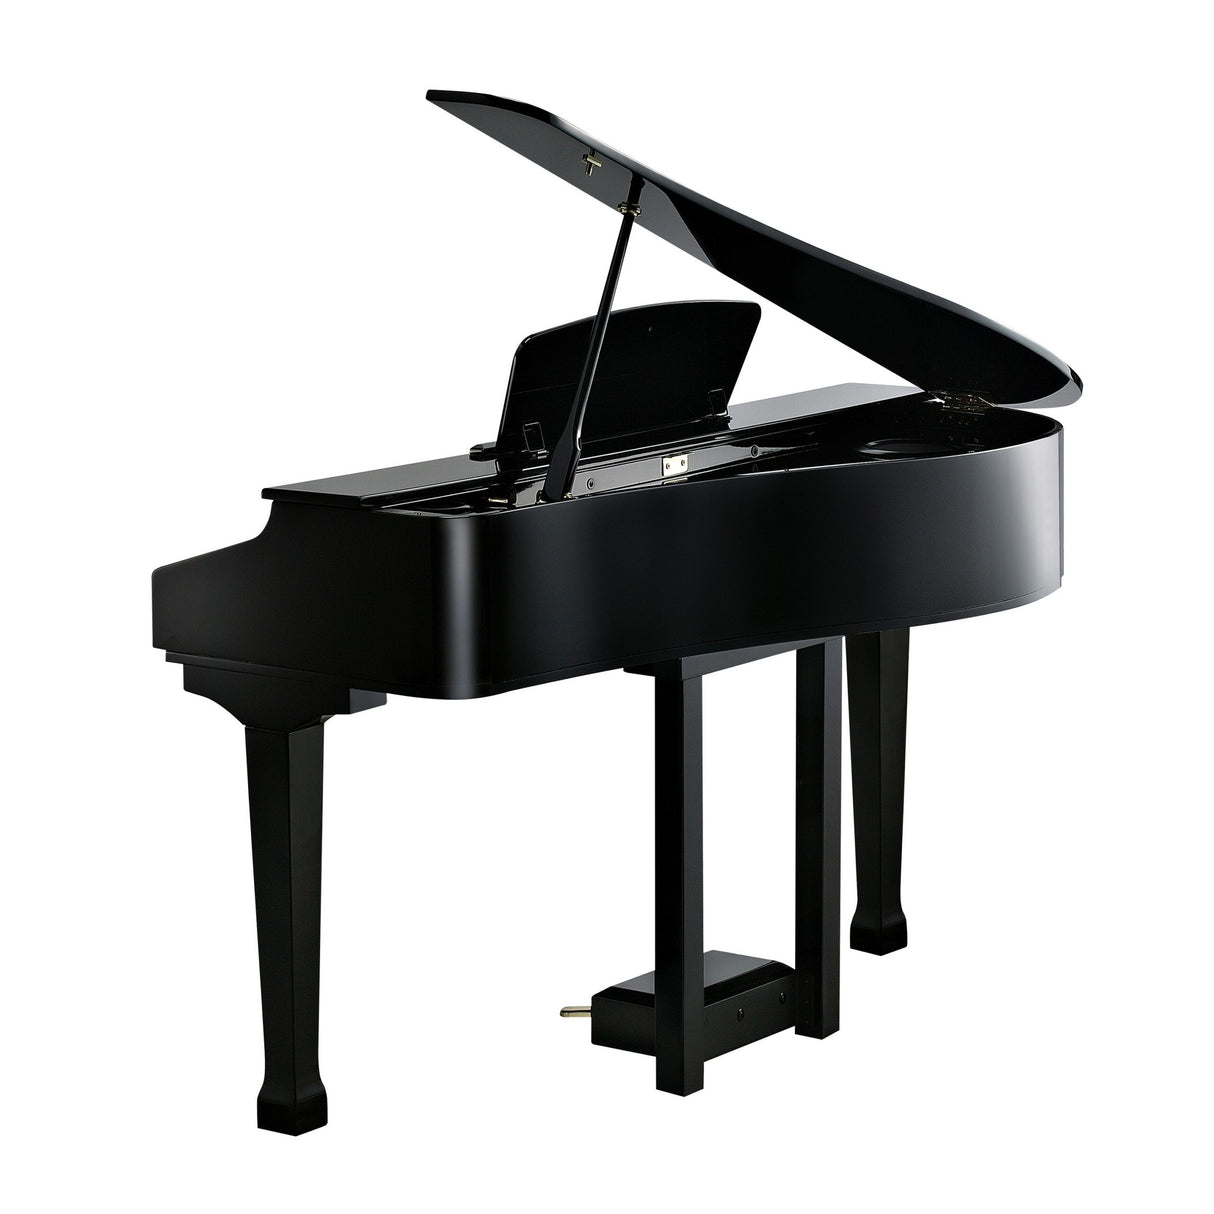 Kurzweil KAG100 88-Key Fully-Weighted Action Digital Grand Piano, Ebony Polish